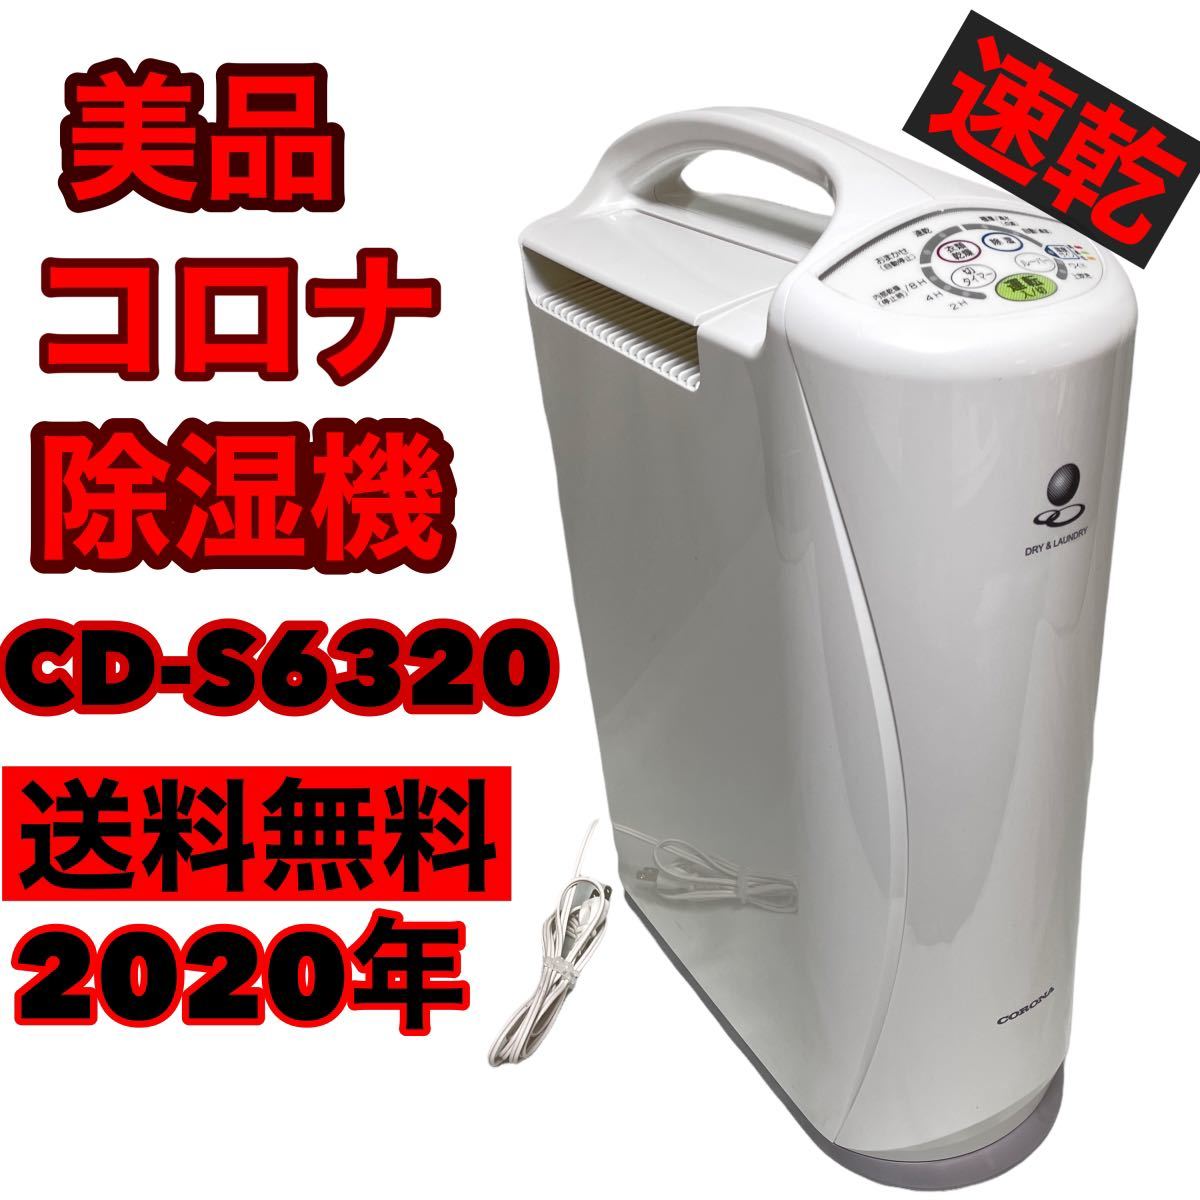 日本セール商品 CORONA CD-S6320 除湿機